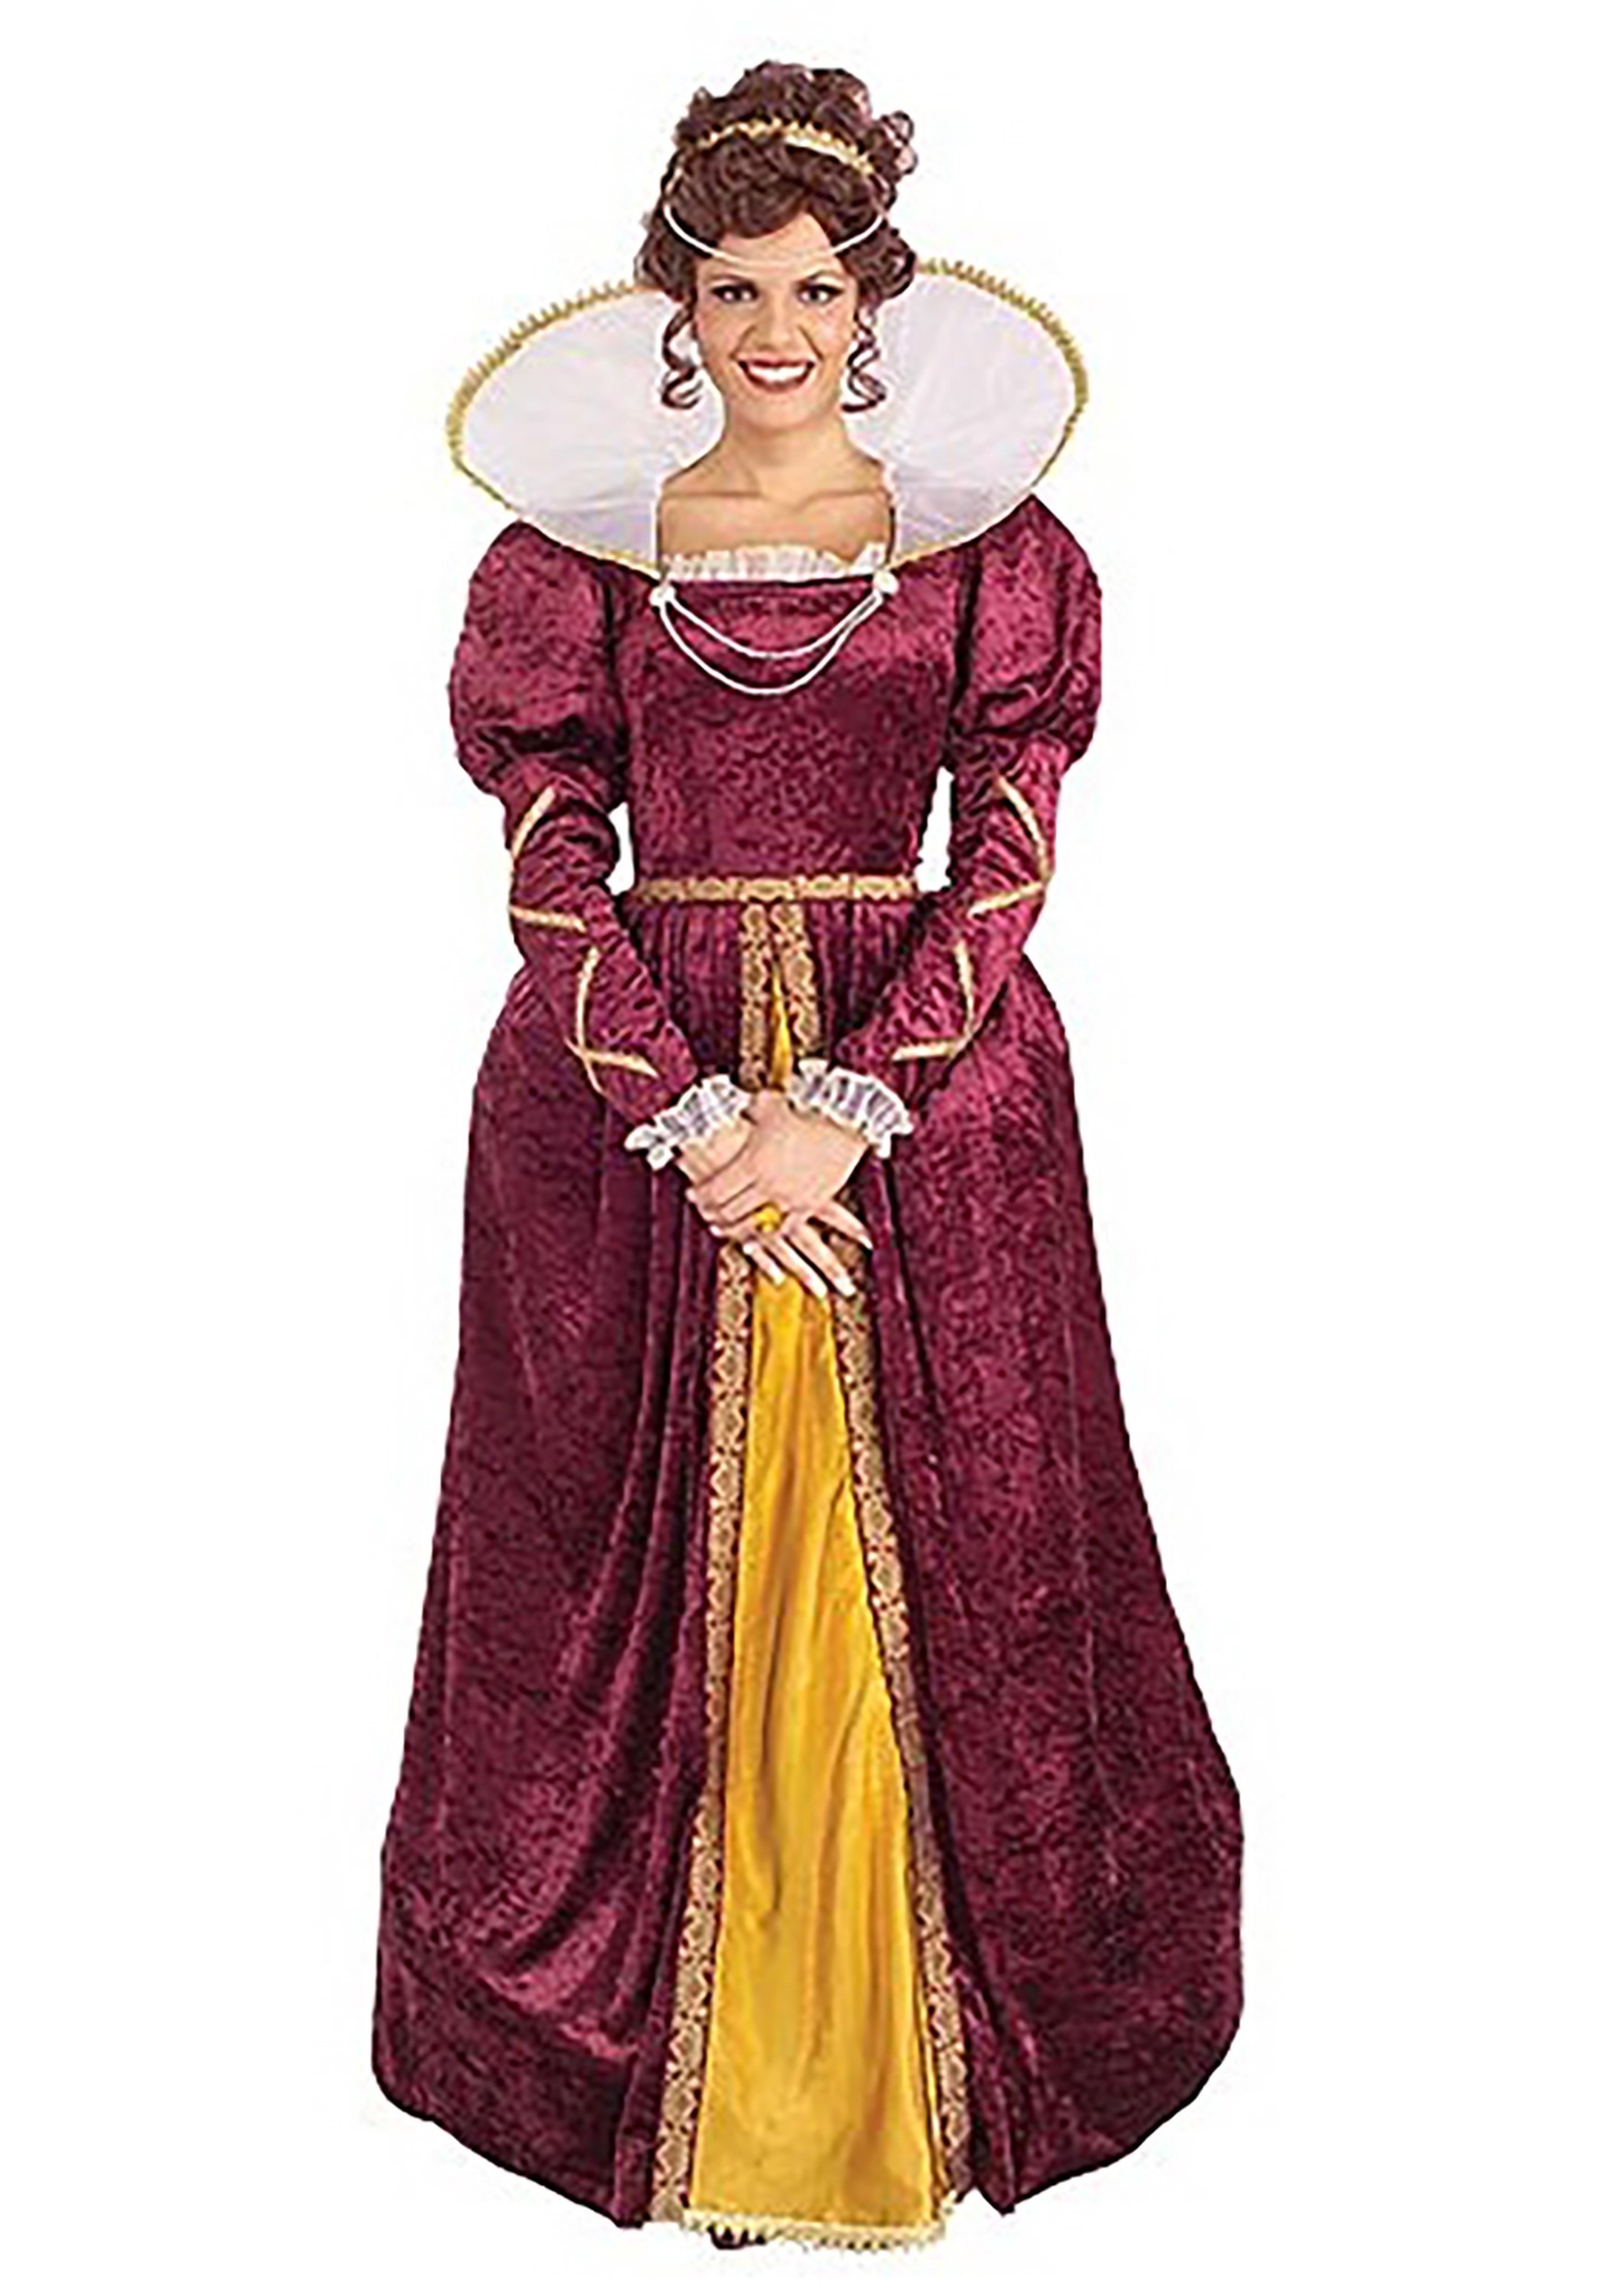 Women's Elizabethan Costume